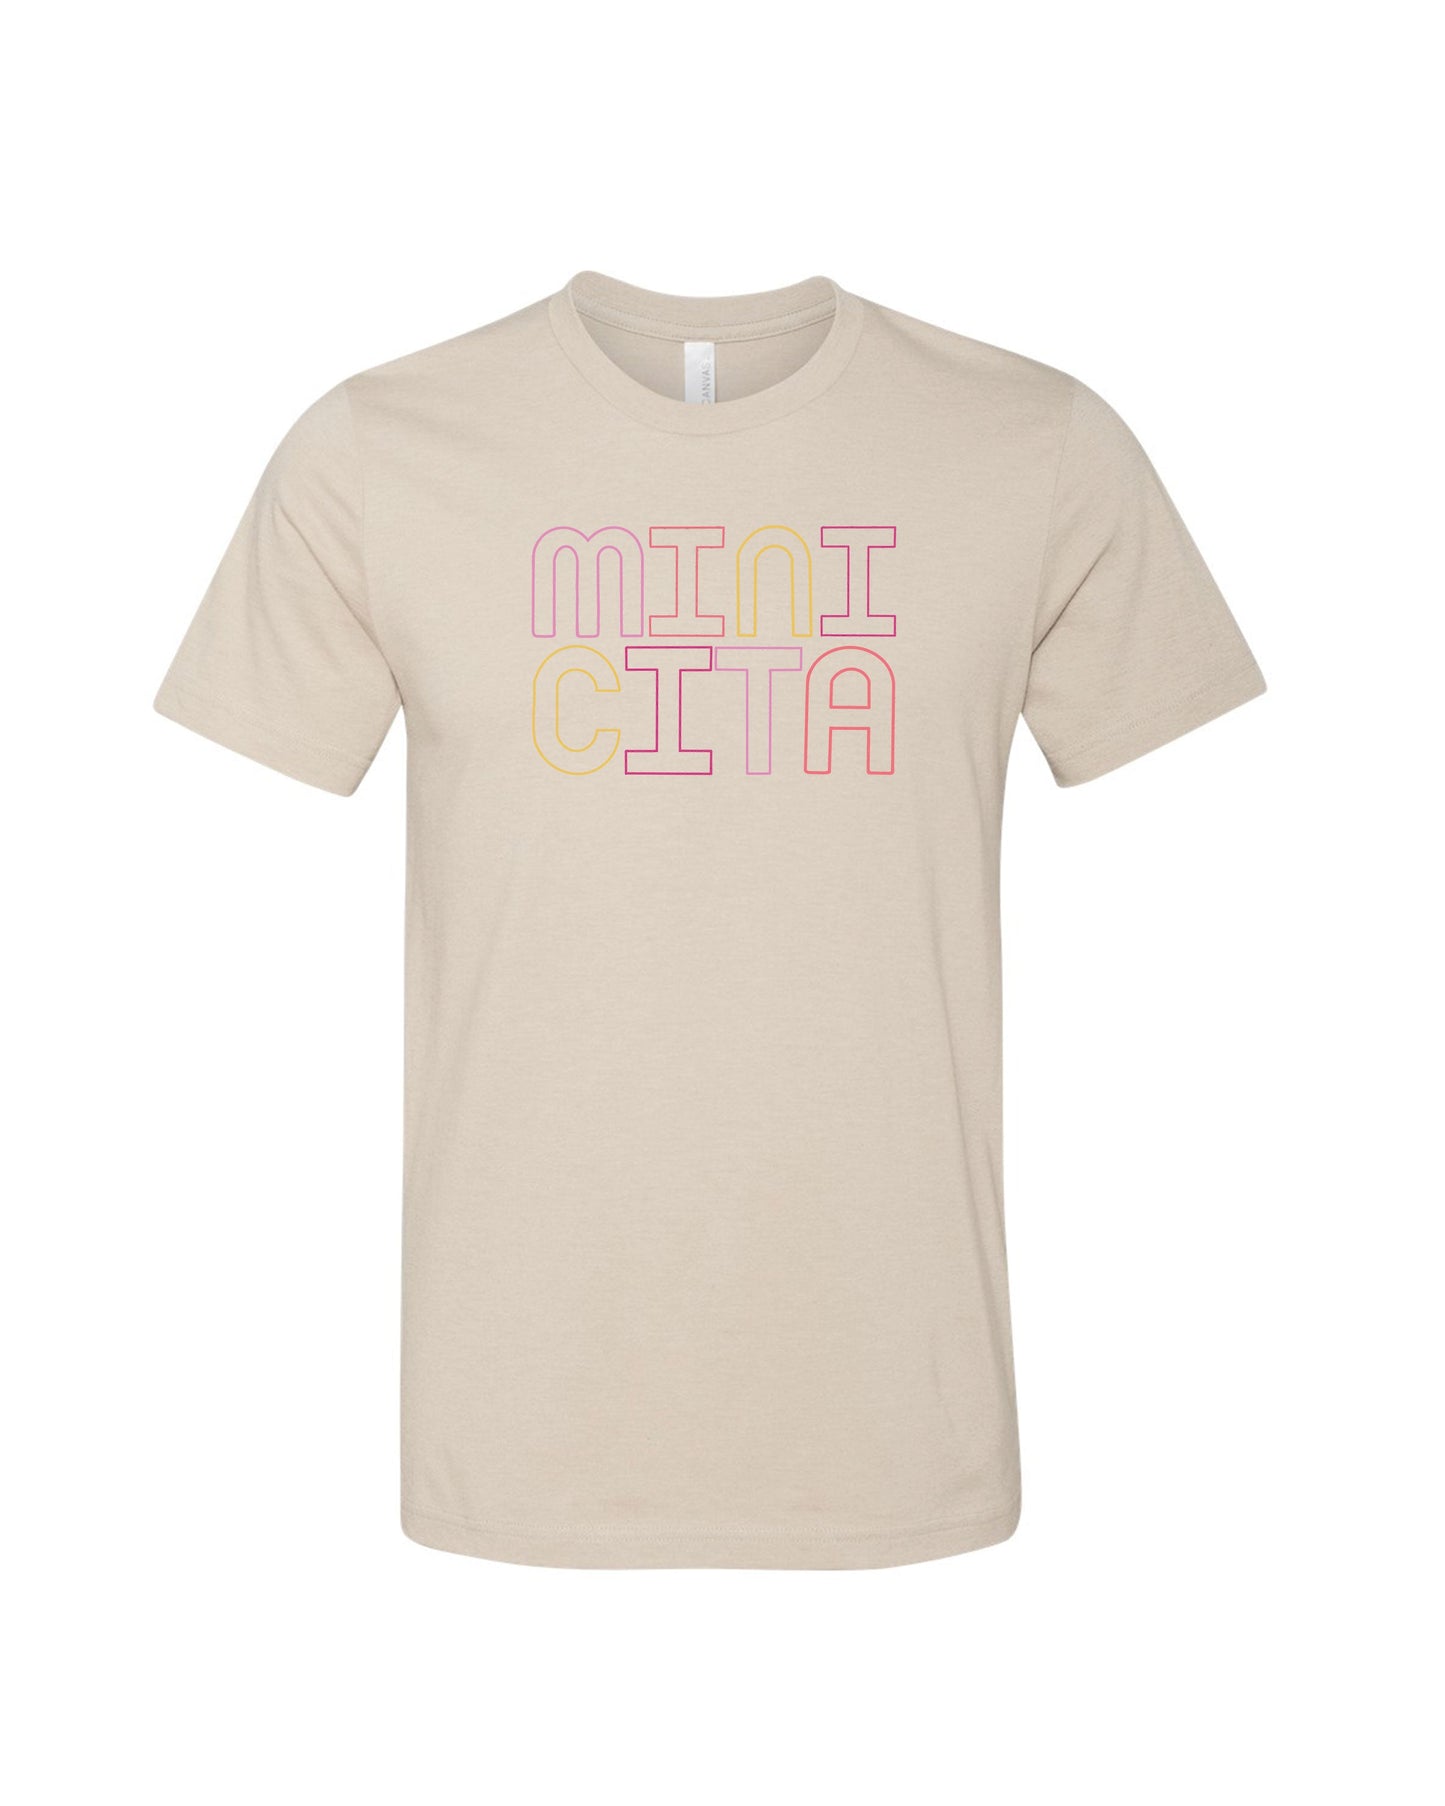 Minicita | Kids Tee | RTS-Sister Shirts-Sister Shirts, Cute & Custom Tees for Mama & Littles in Trussville, Alabama.